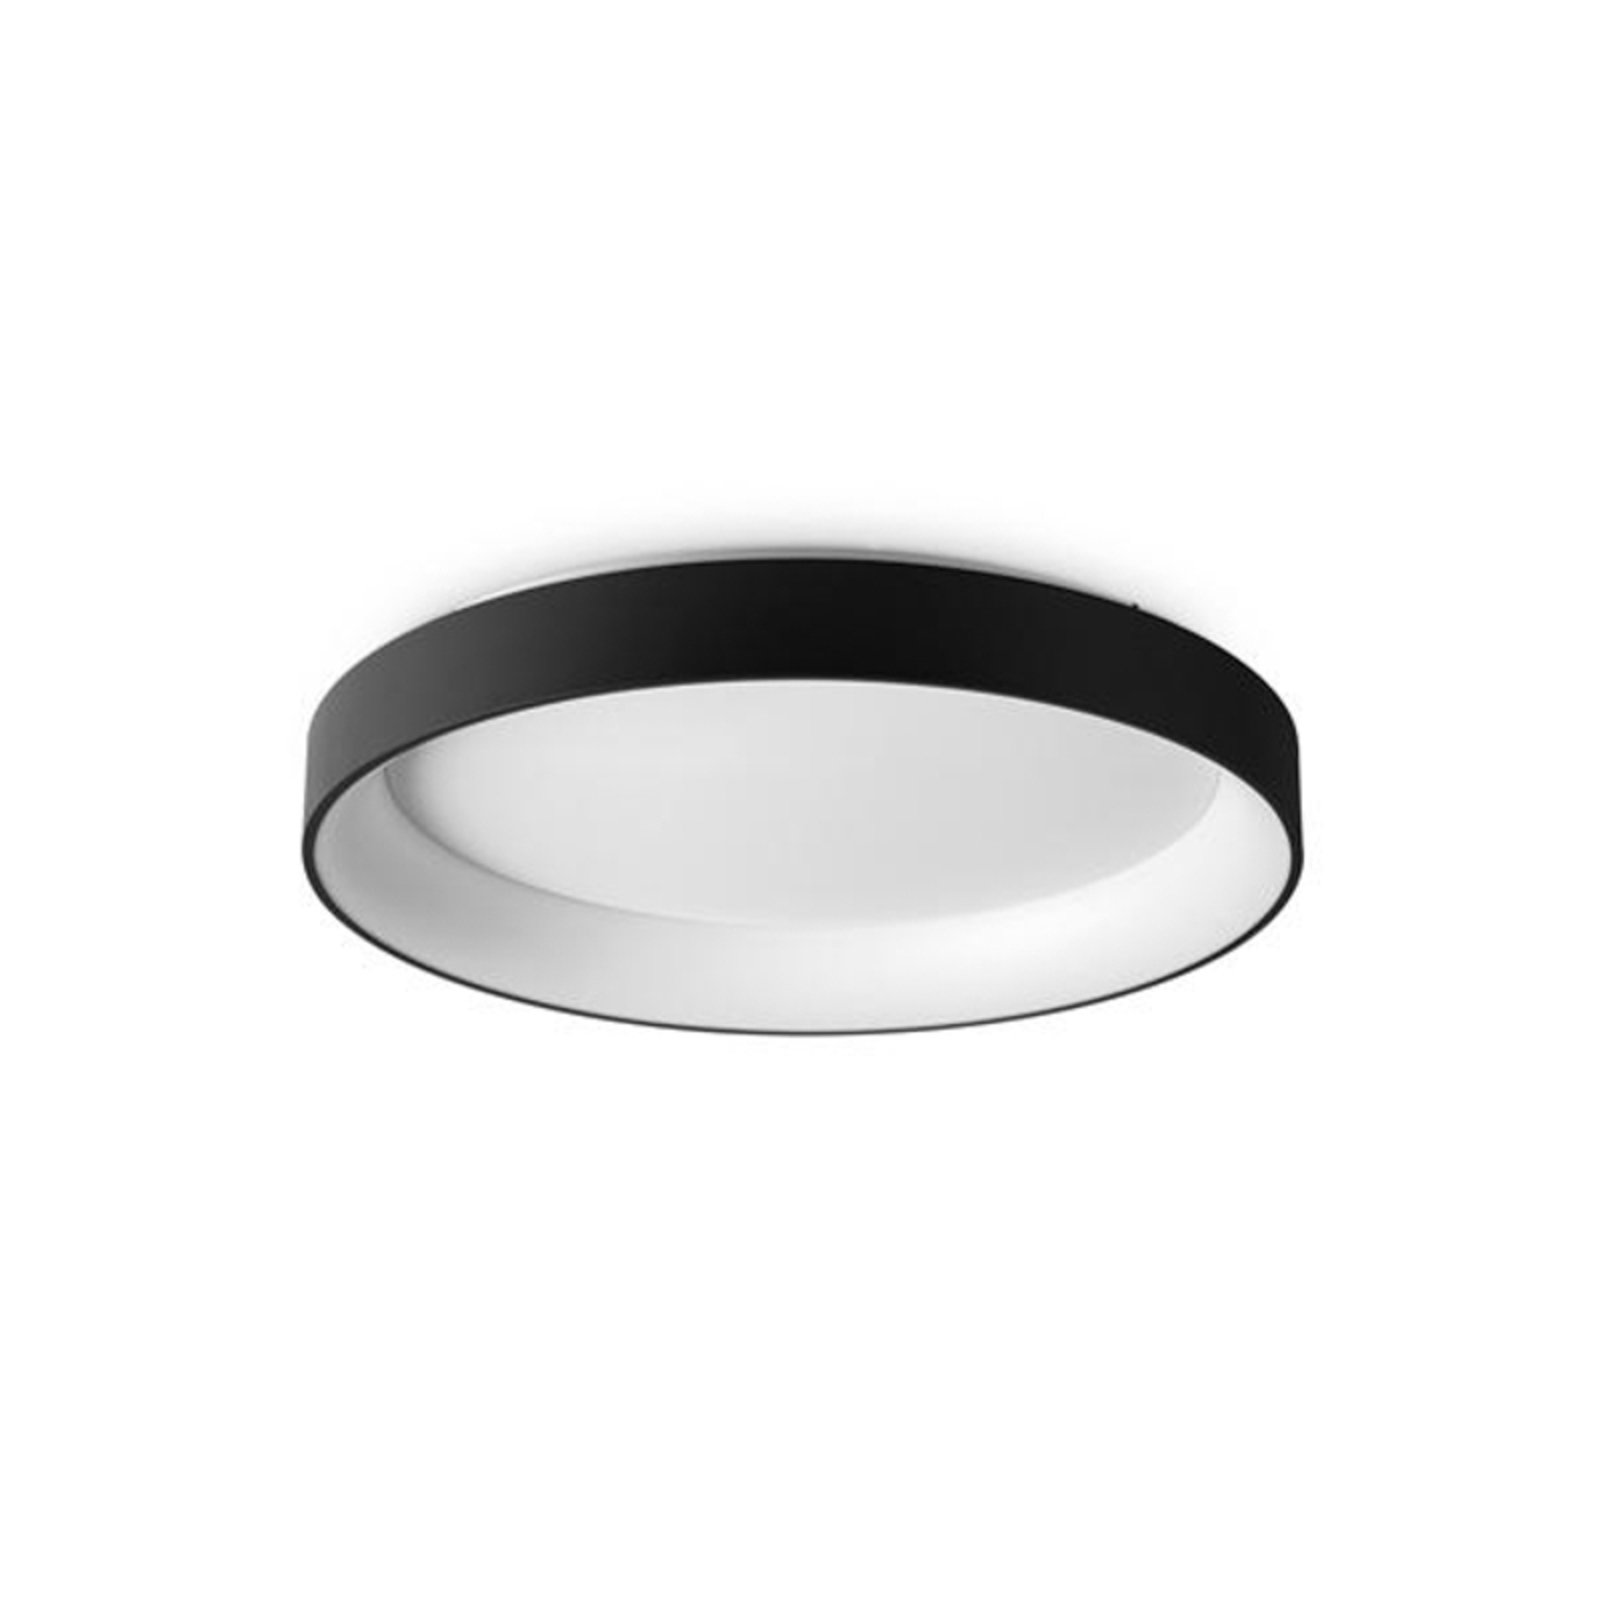 Ideal Lux LED-kattovalaisin Ziggy, musta, Ø 80 cm, metallia